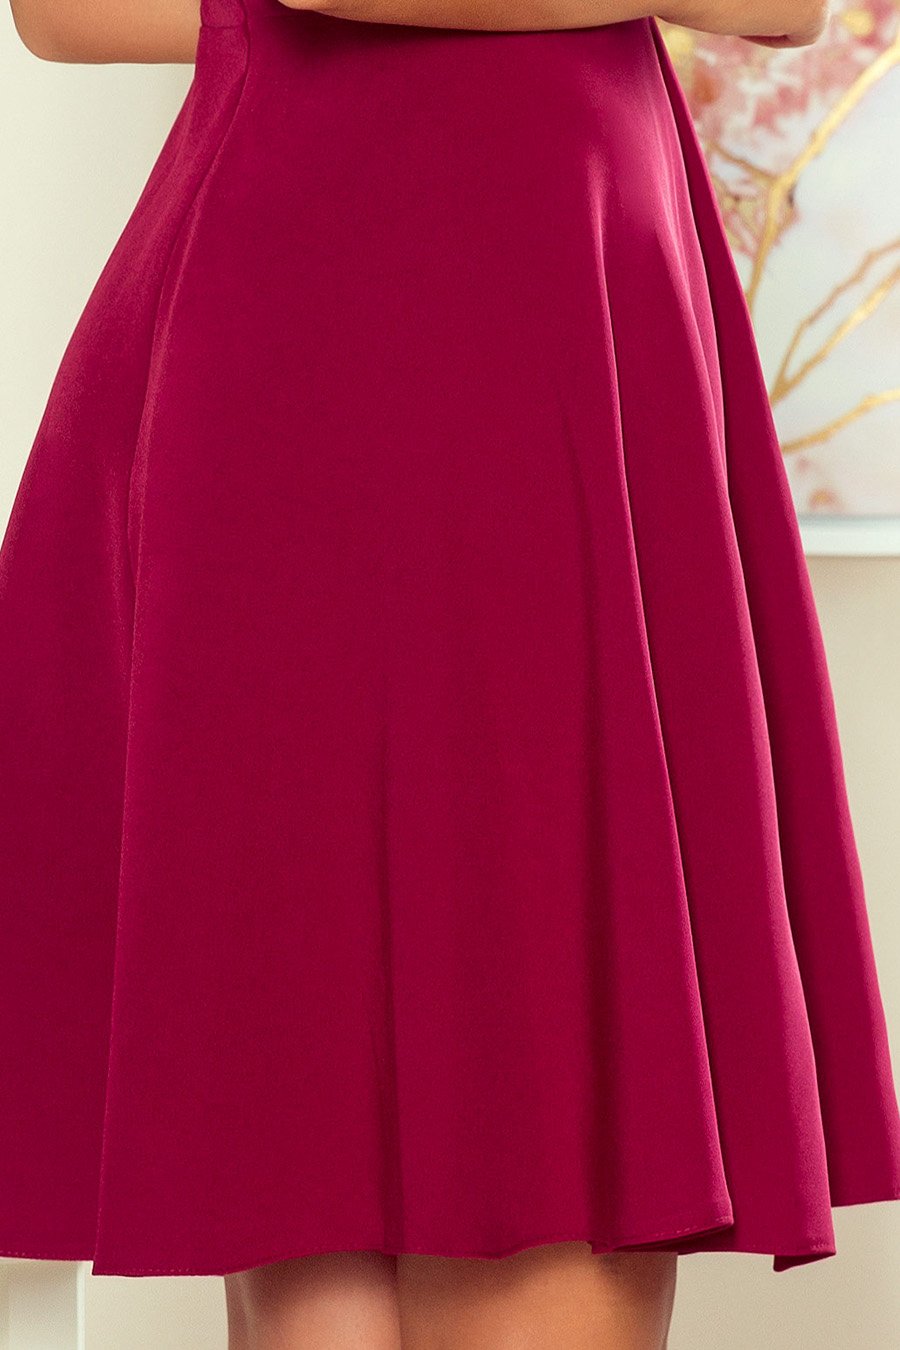 Arielle női ruha, Burgundy színű 7